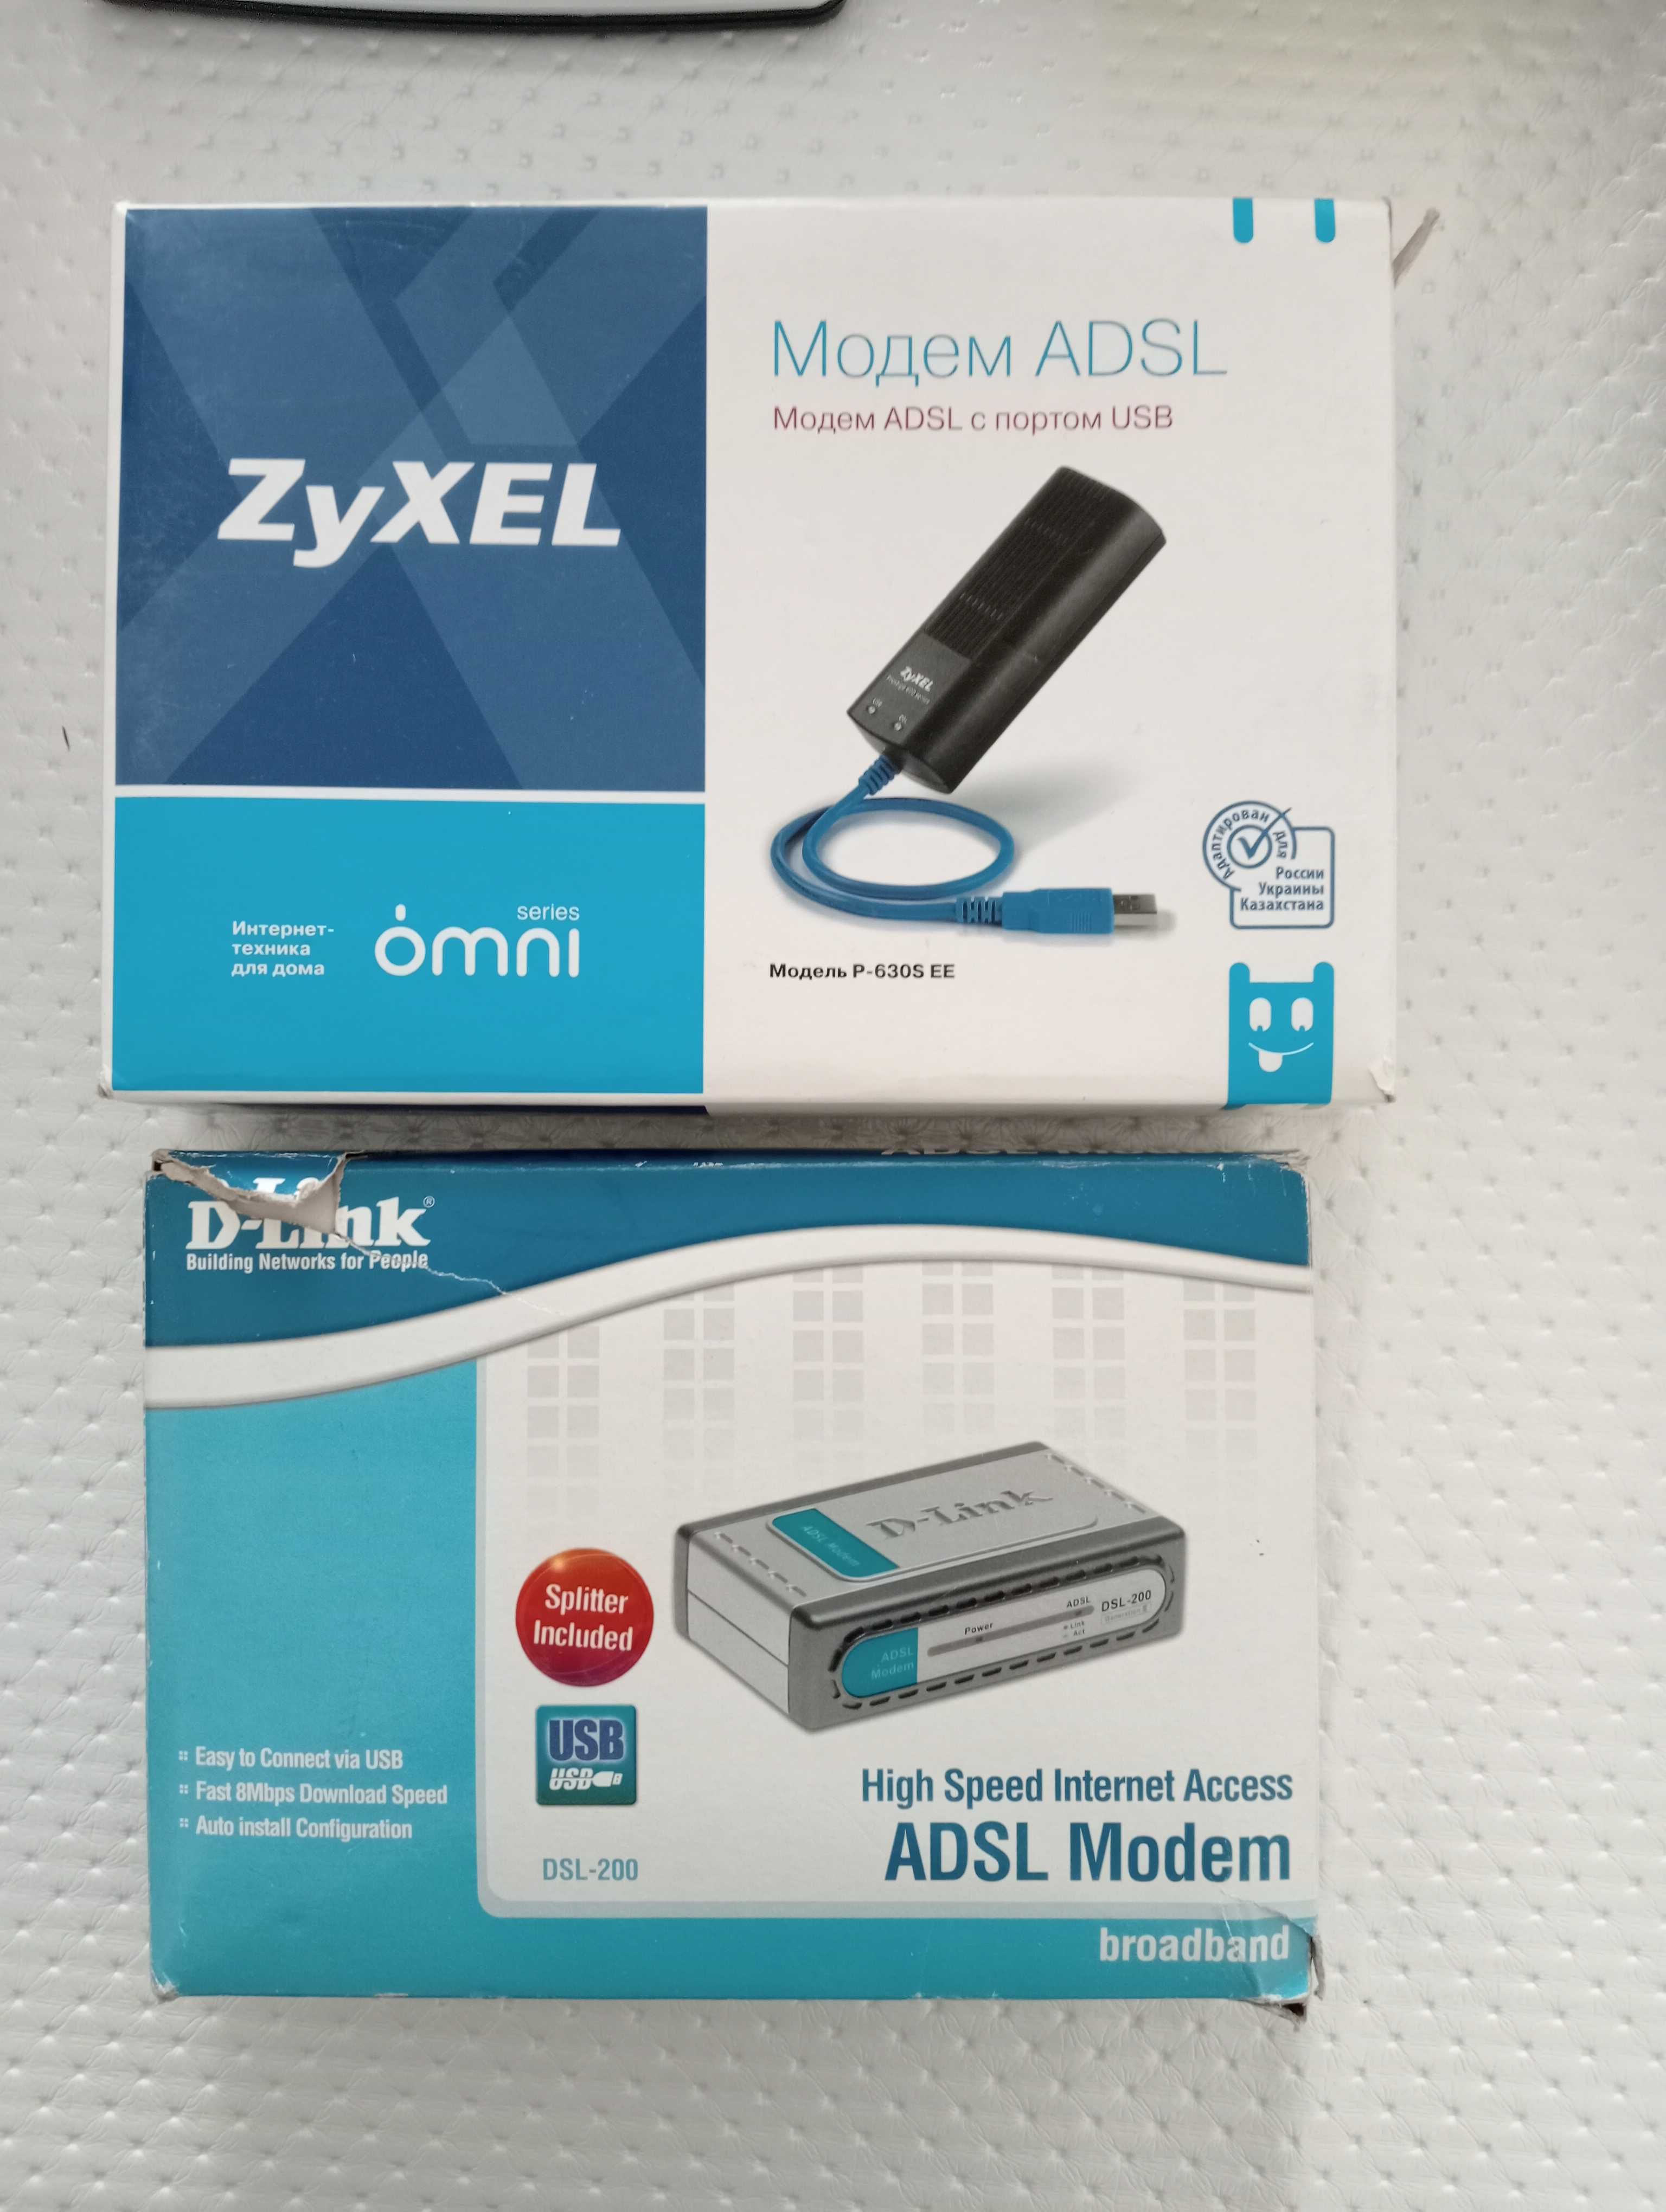 Модем ADSL D-Link и ZyXEL для интернета